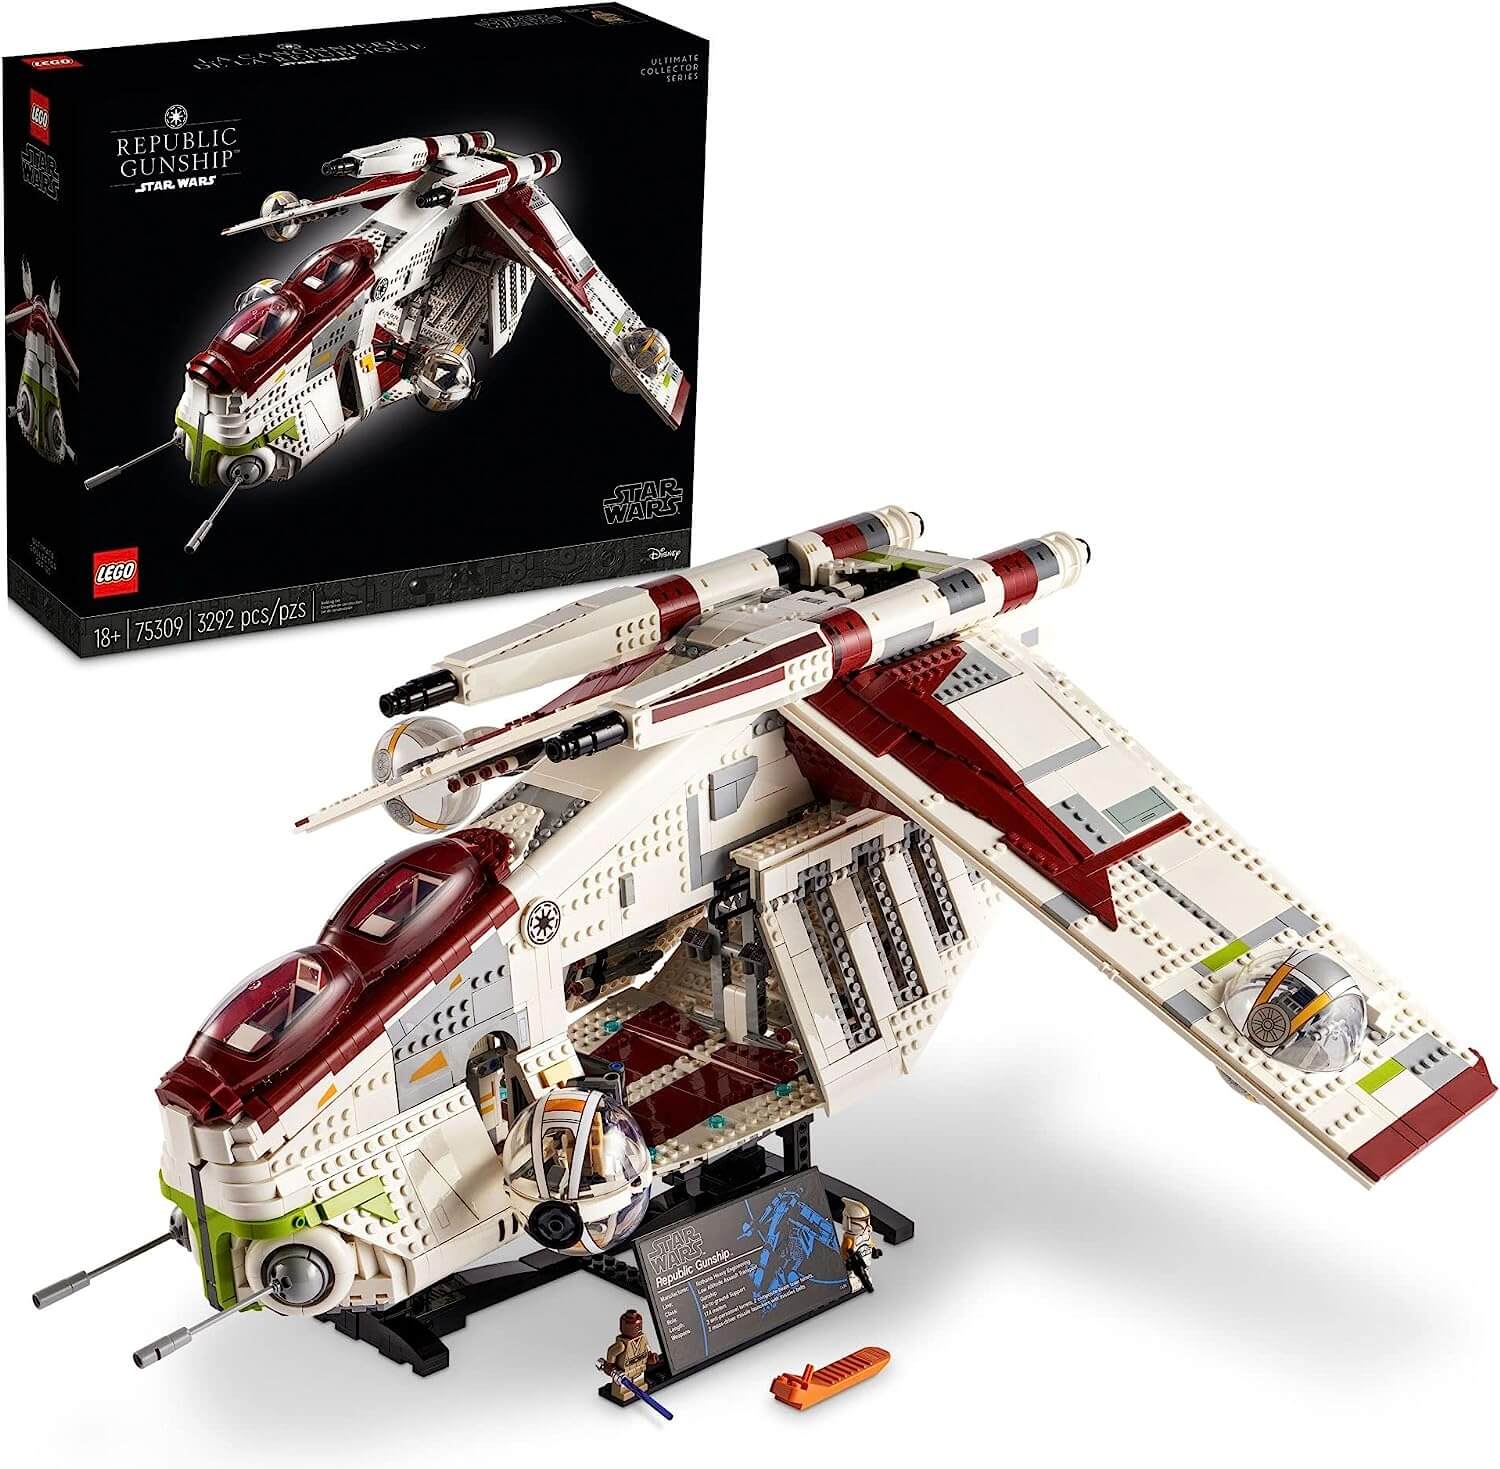 6. LEGO Star Wars UCS Republic Gunship (#75309) - $149.99 🚁